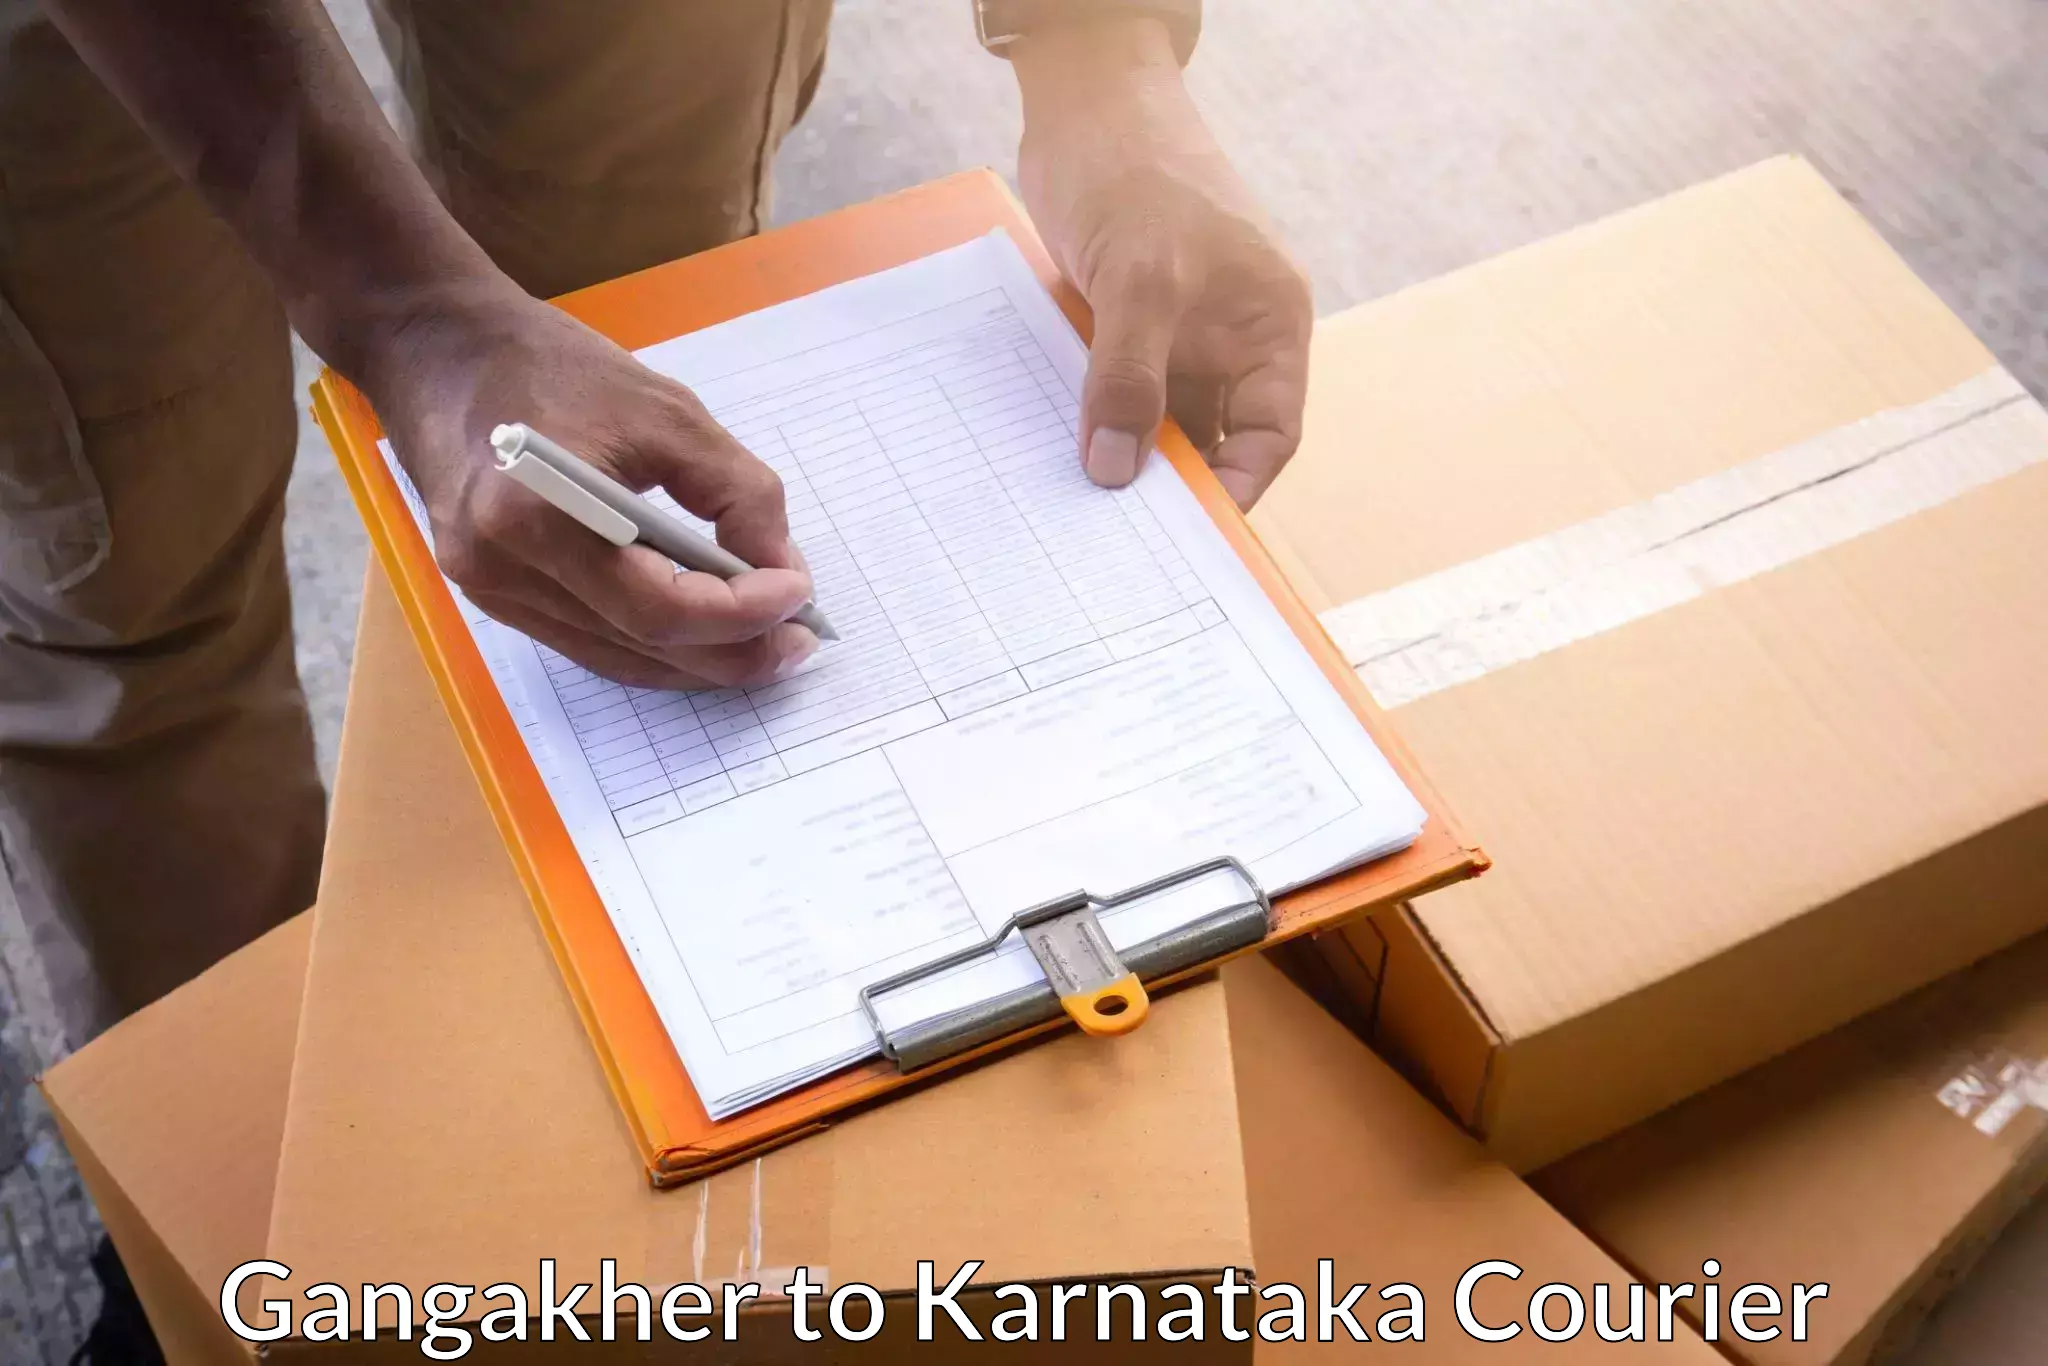 Automated shipping processes Gangakher to Karnataka